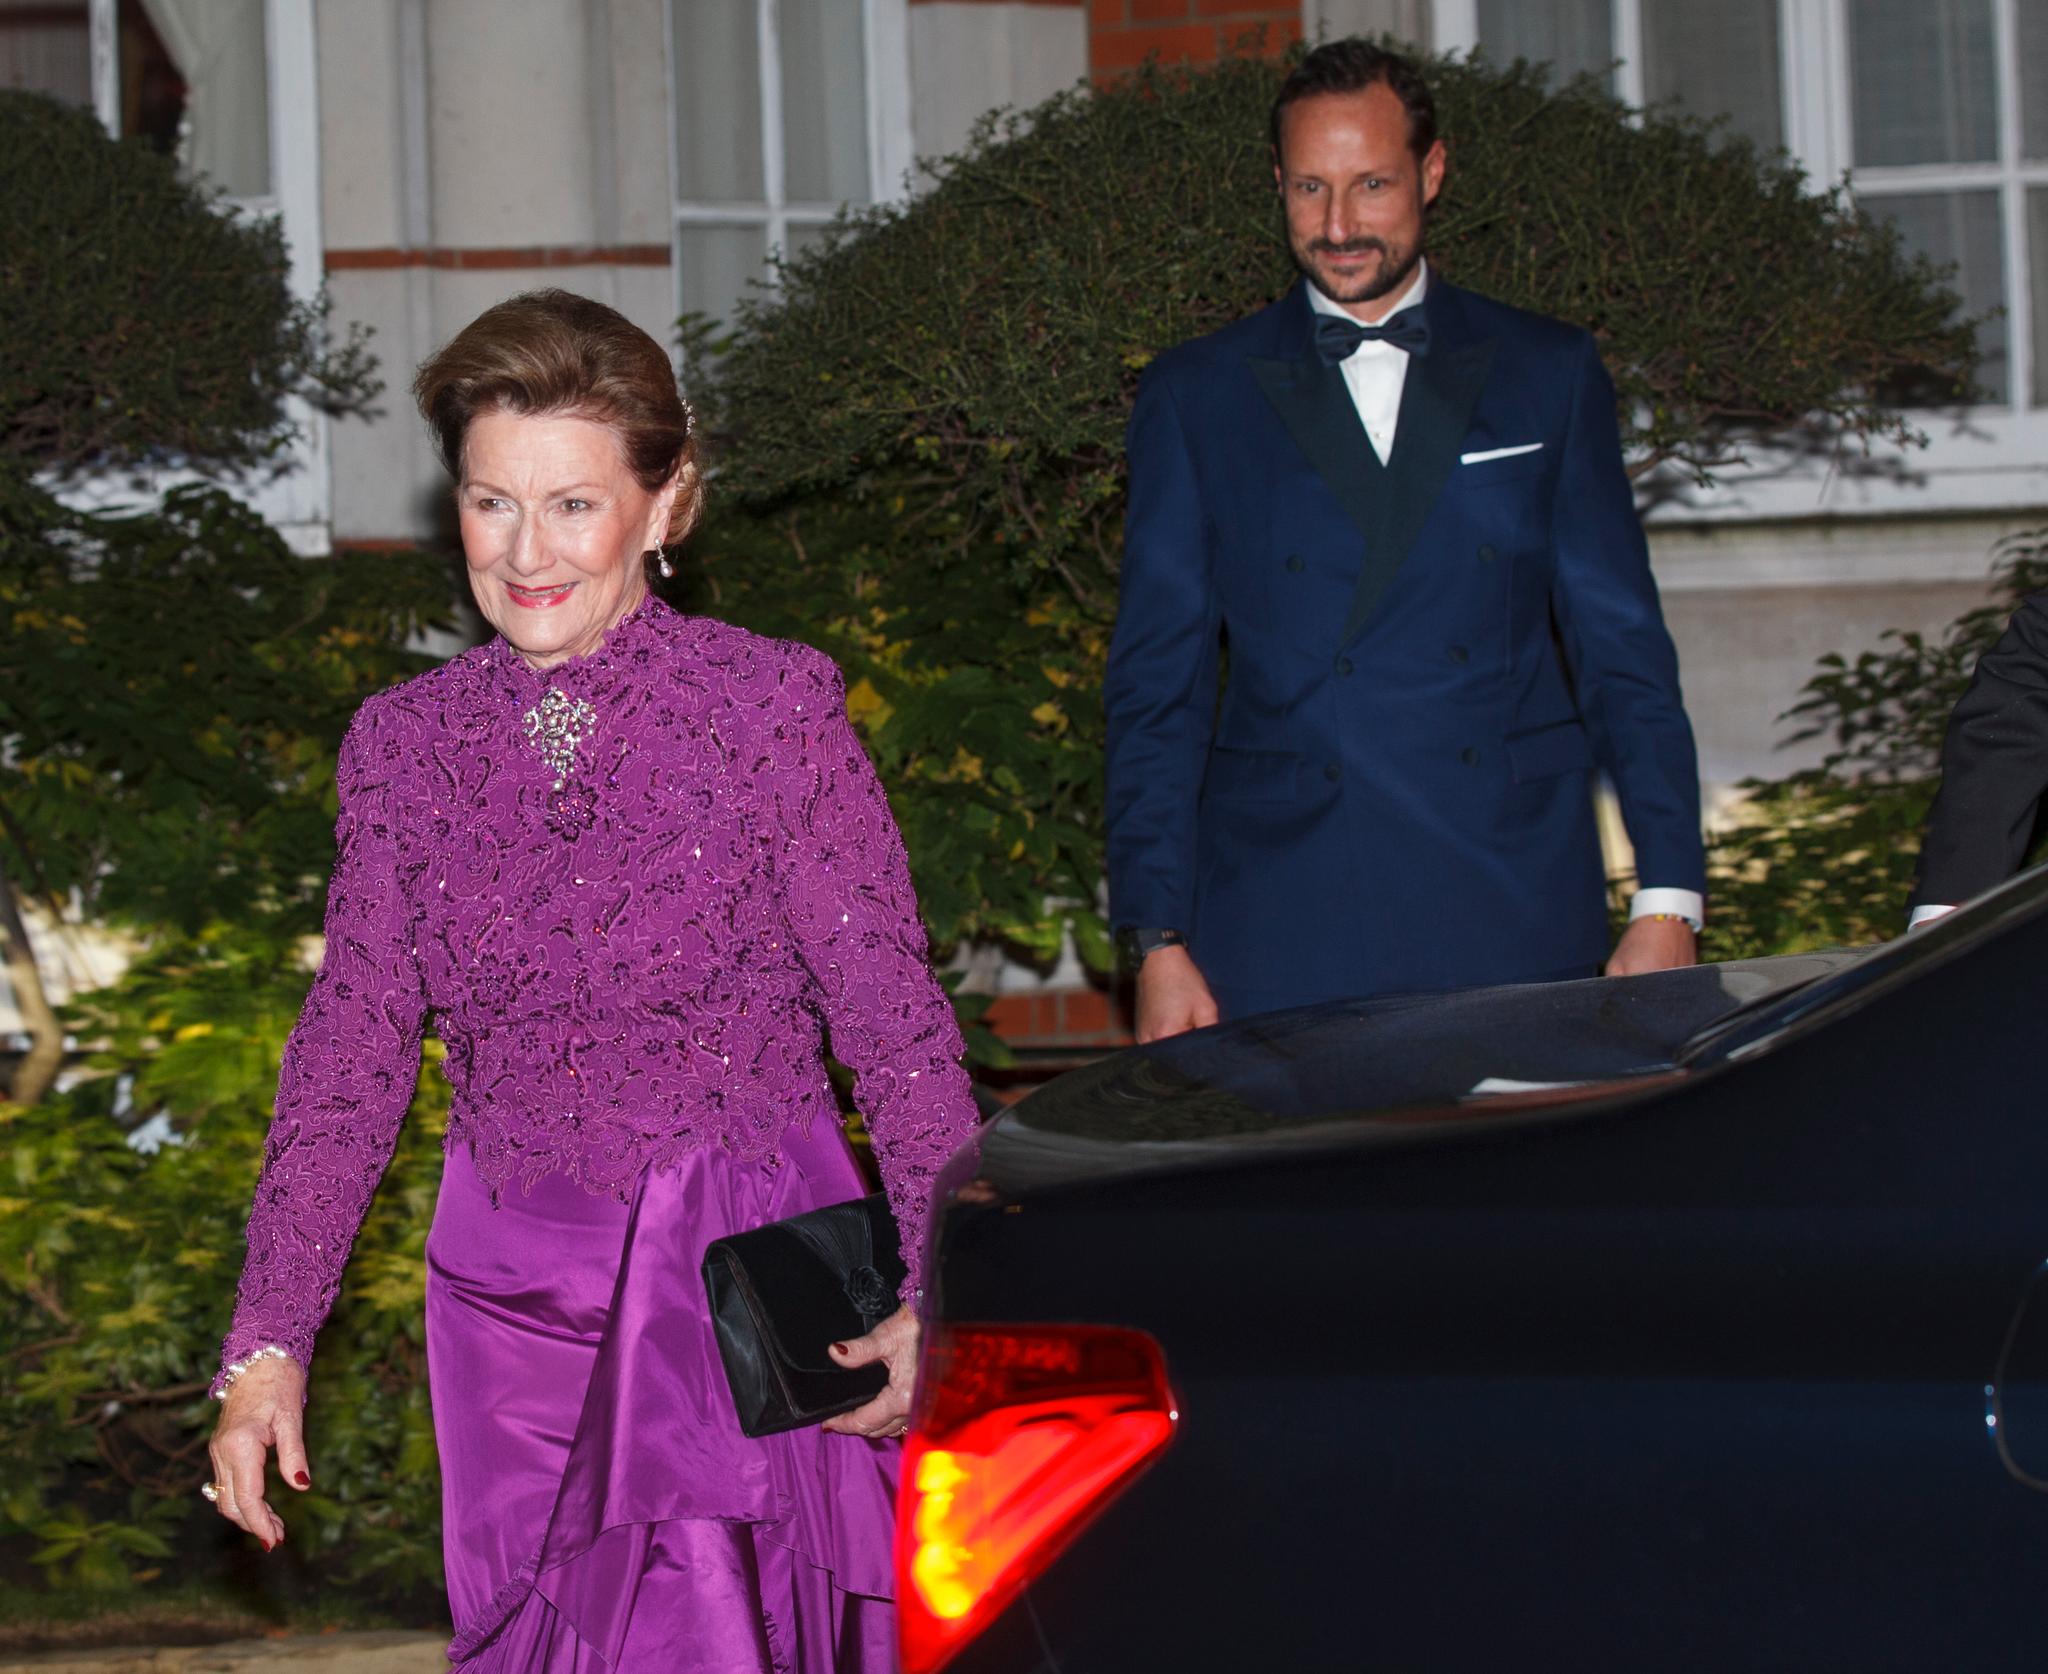  Dronning Sonja og kronprins Haakon i London. Her på vei til mottagelse og middag i anledning 70-årsdagen til prins Charles.